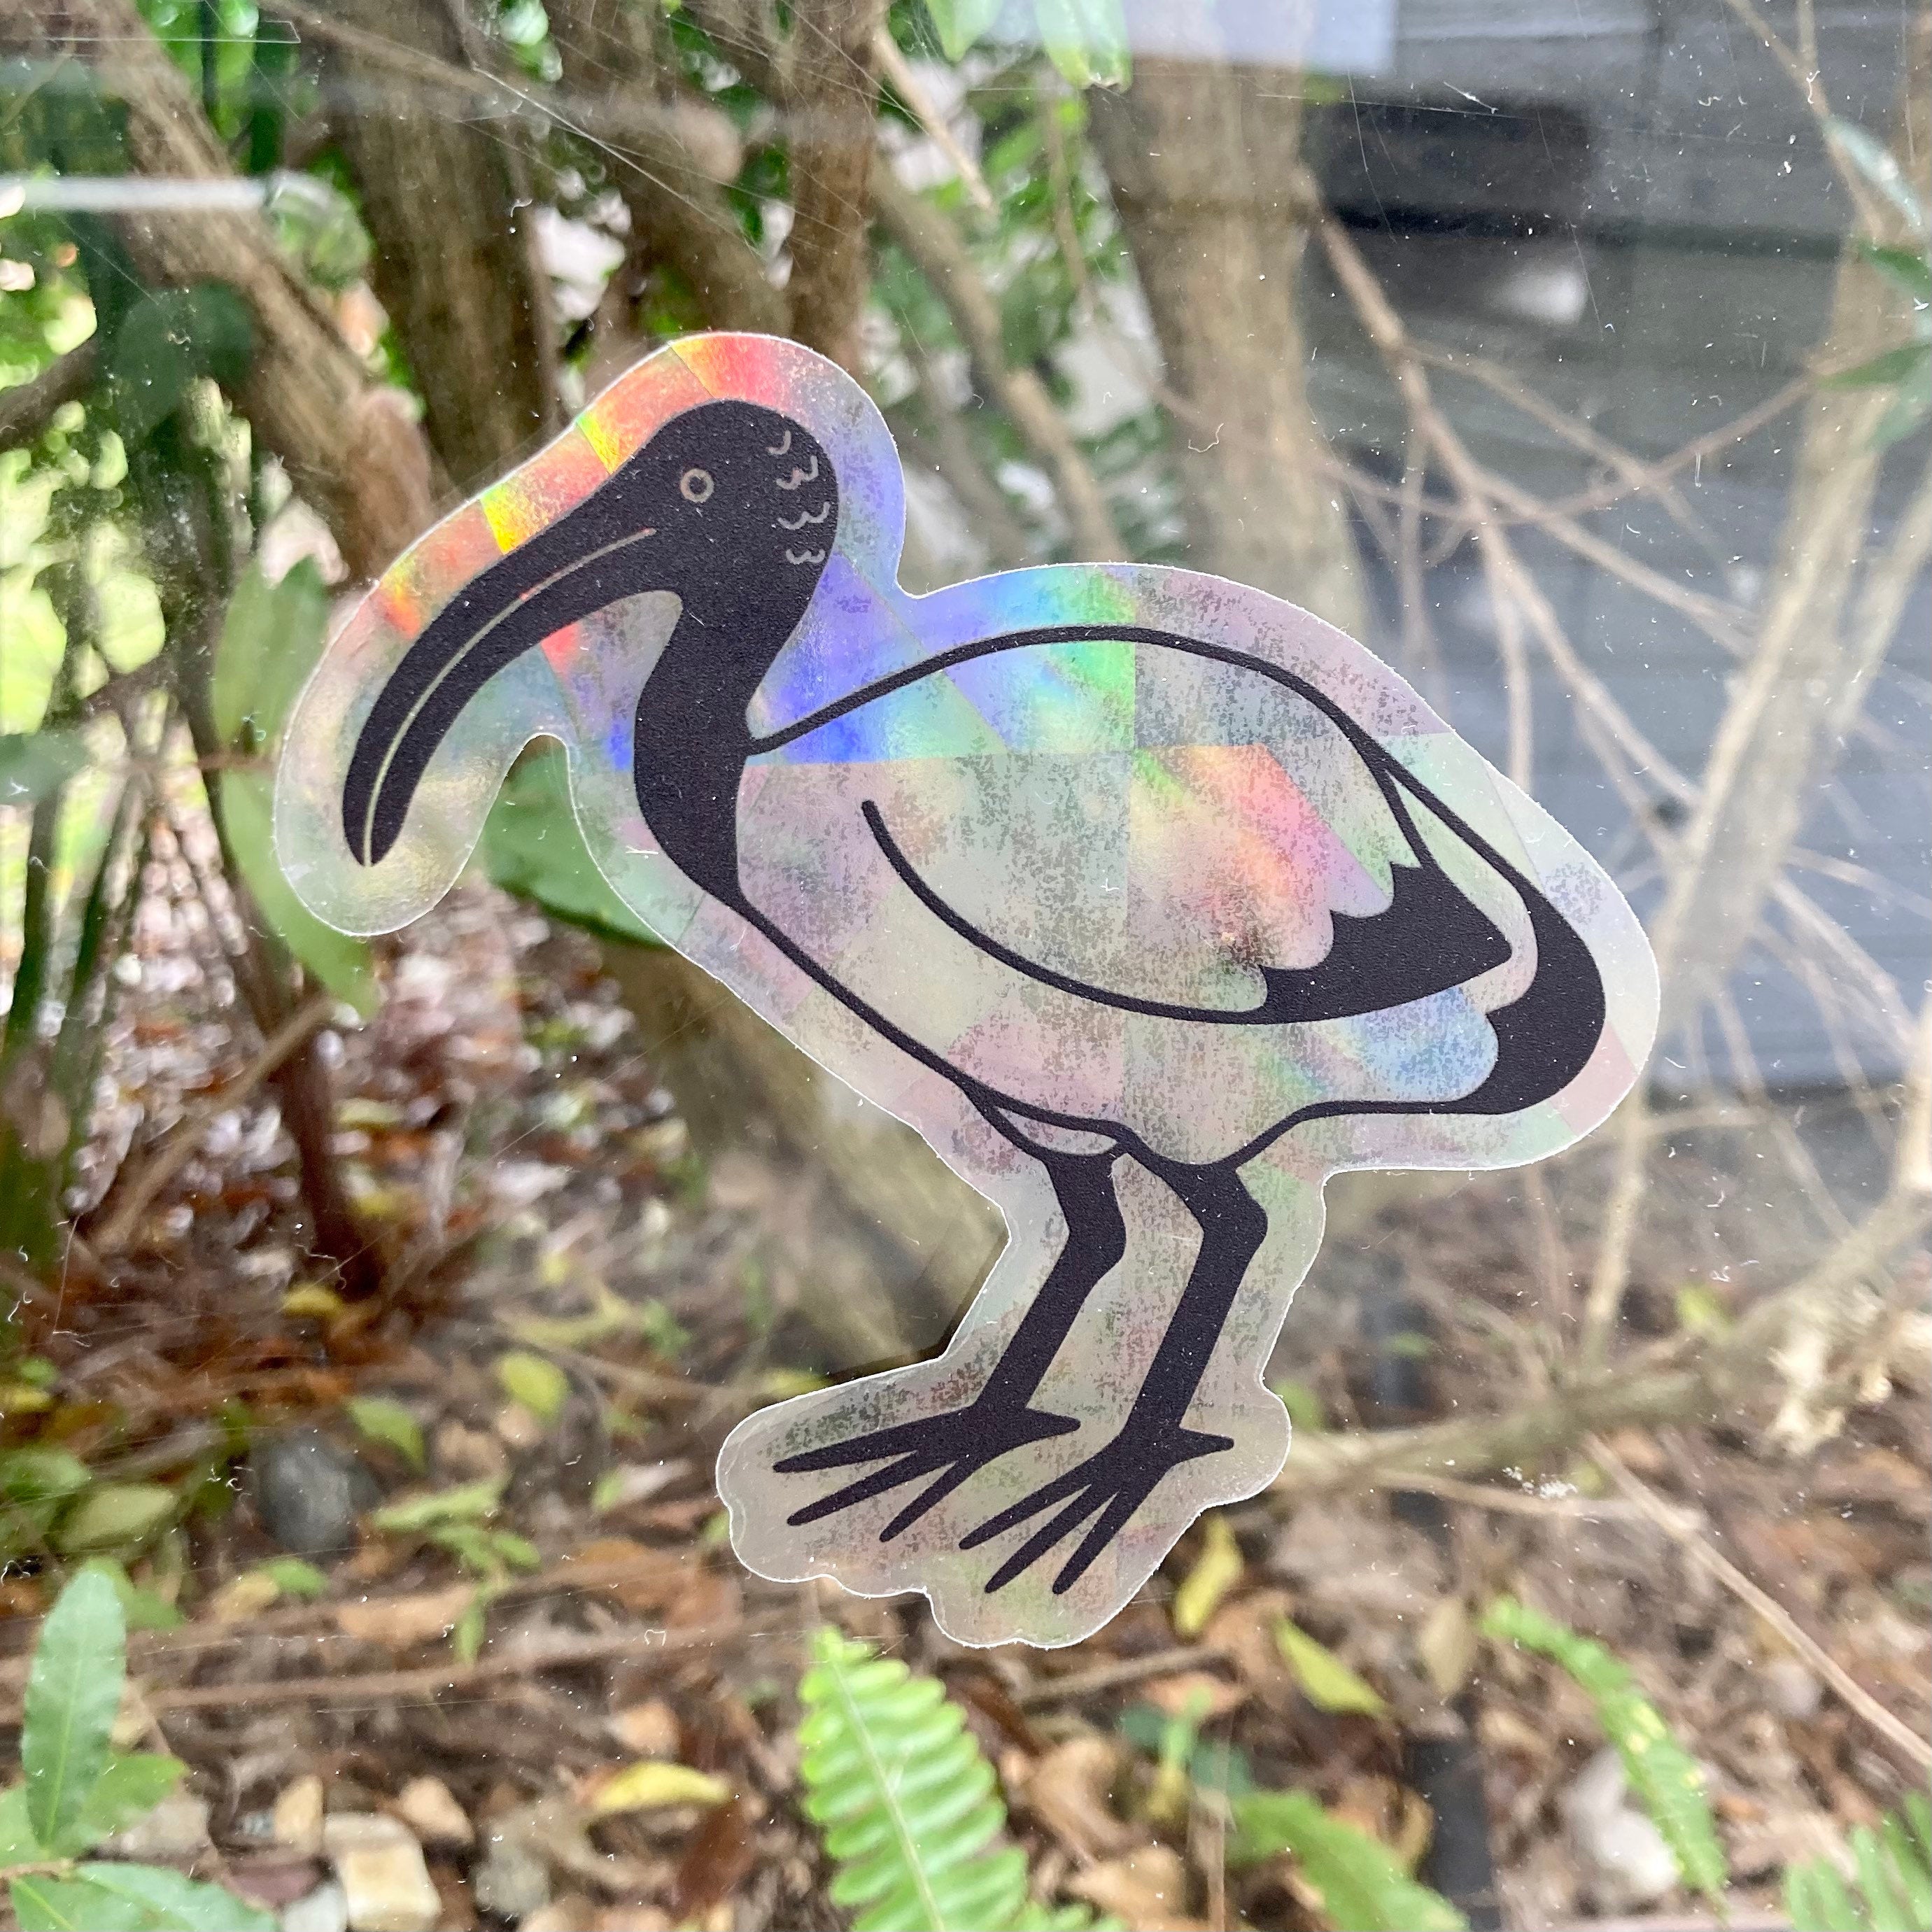 Australian Ibis Prismatic Rainbow Suncatcher Decal Sticker - 4” wide, transparent sun catcher - stained glass window effect